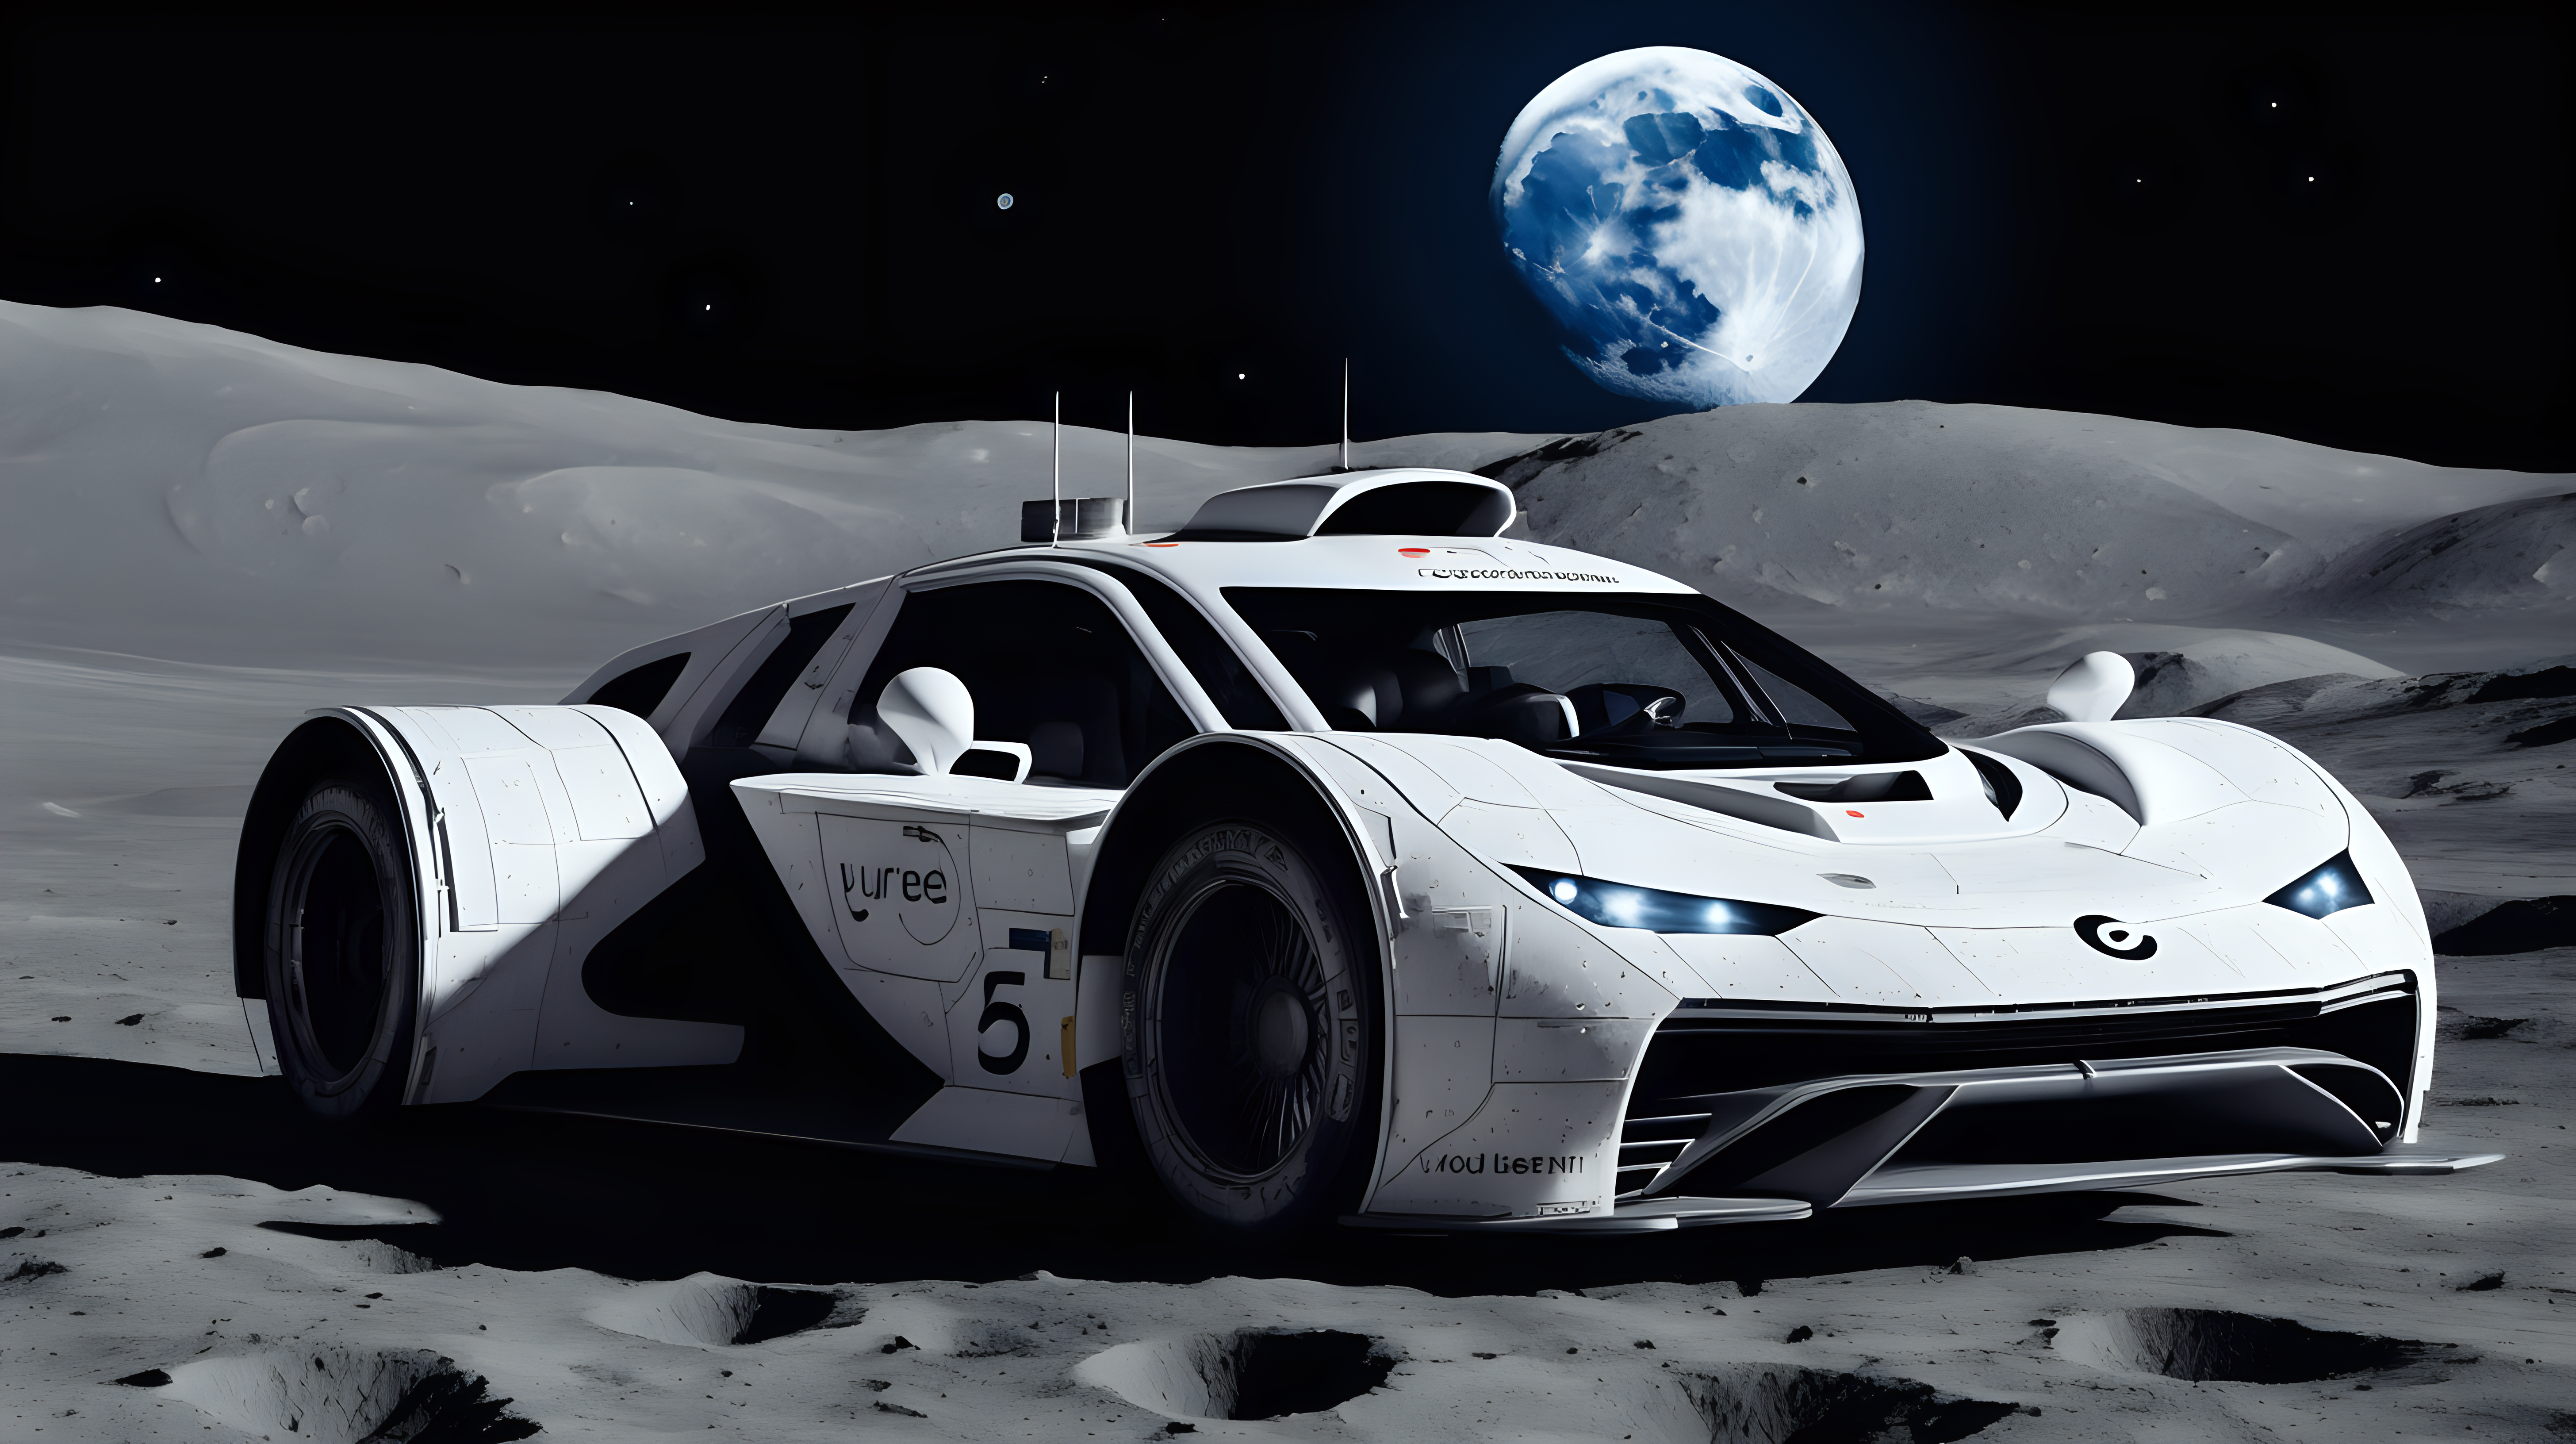 European sports car driving on the Moon